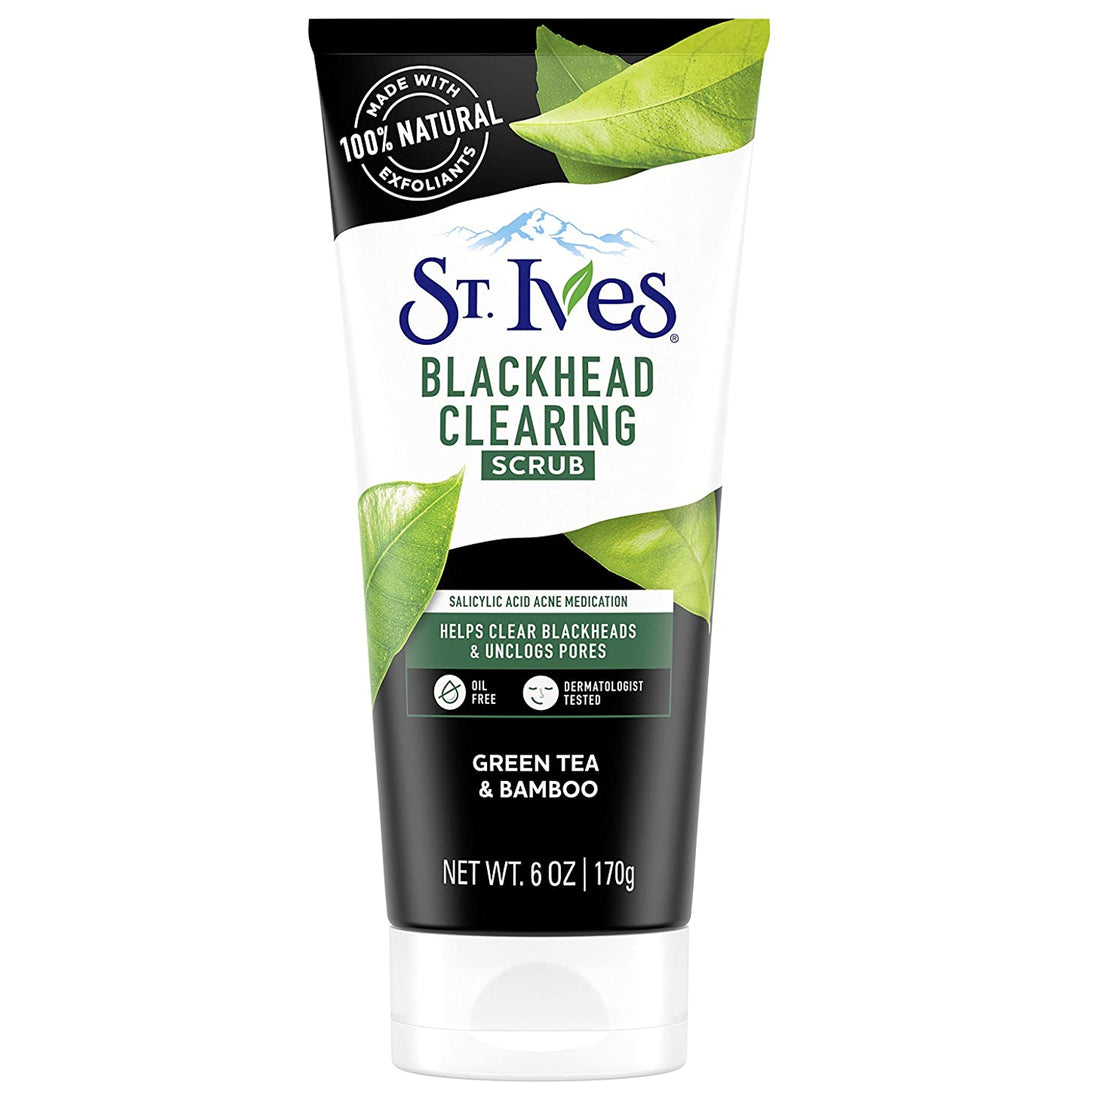 St. Ives Blackhead Clearing Green Tea Scrub 150ml